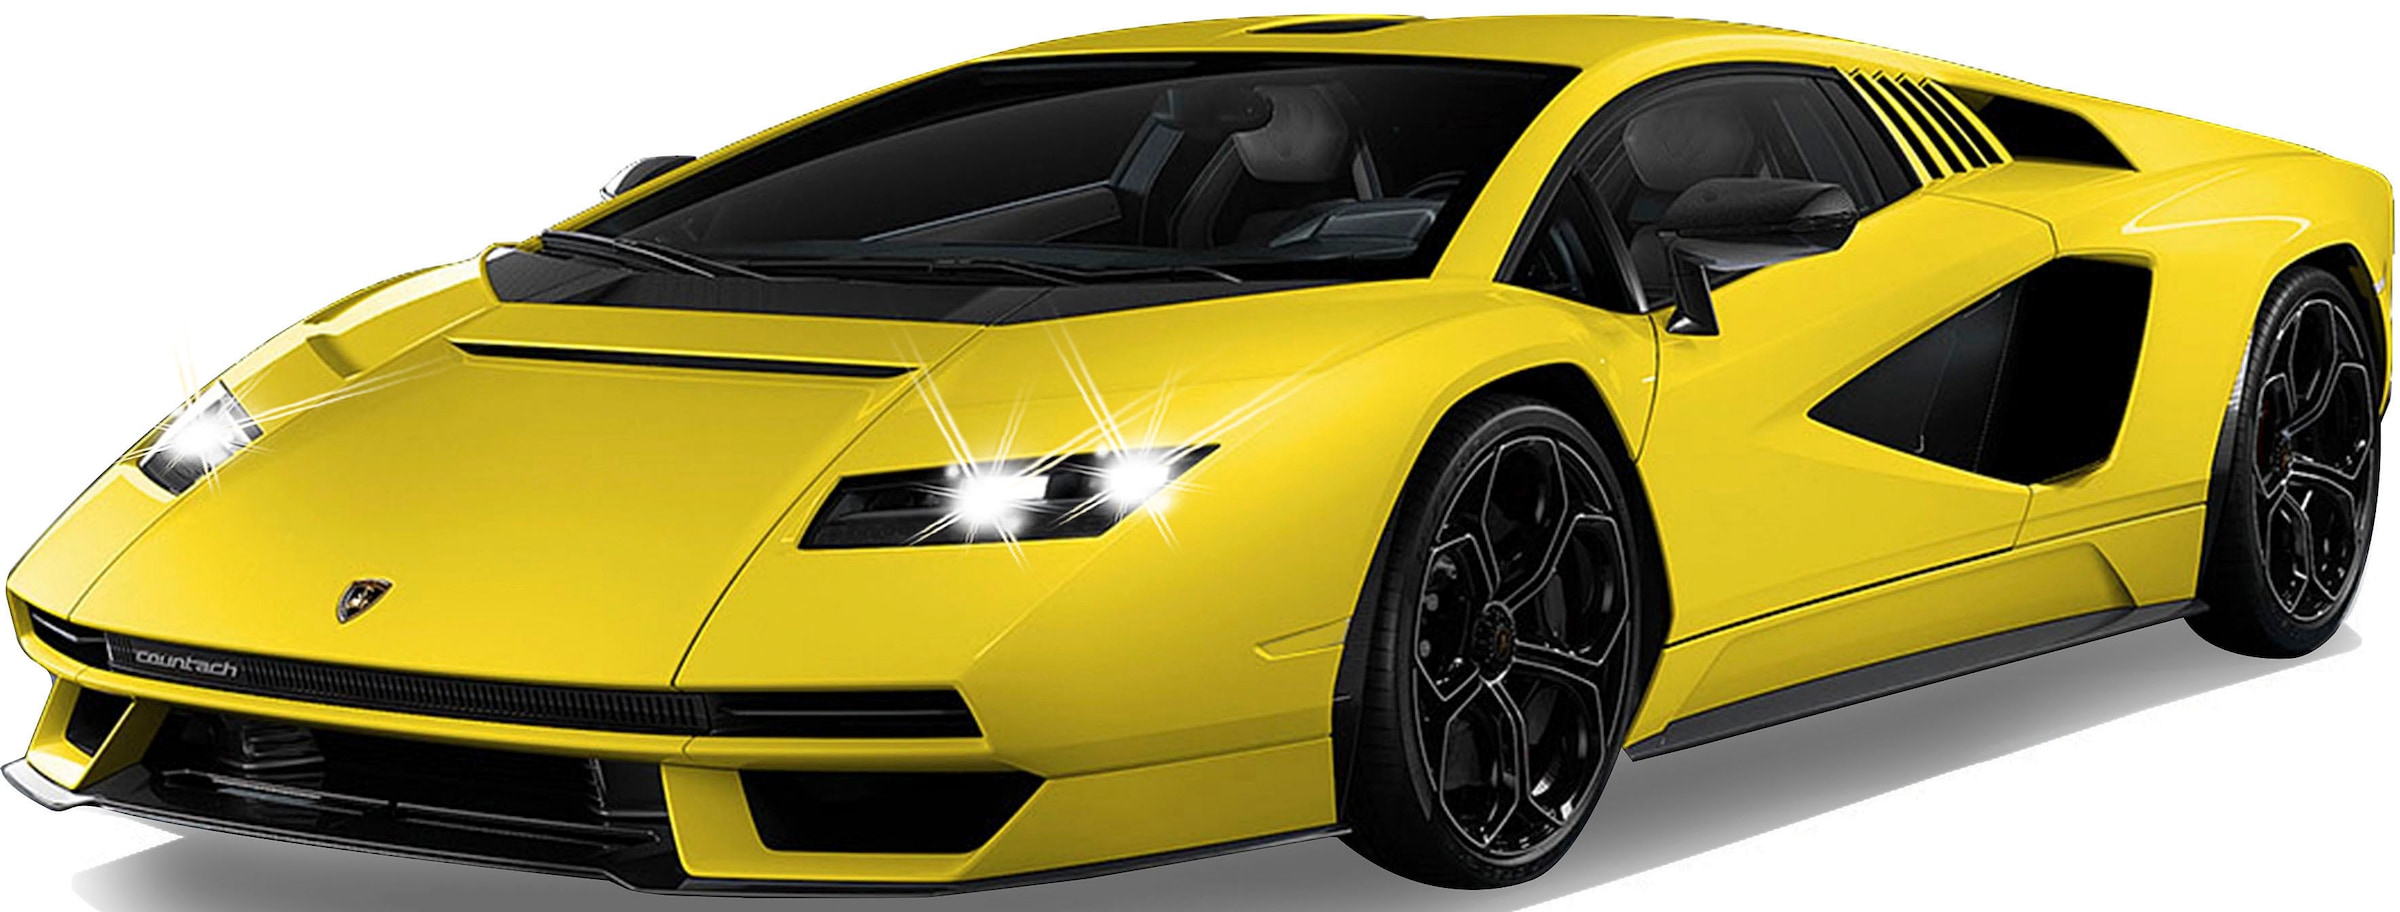 Jamara RC-Auto »Deluxe Cars, Lamborghini Countach LPI 800-4 1:16, gelb - 2,4 GHz«, mit LED-Lichtern